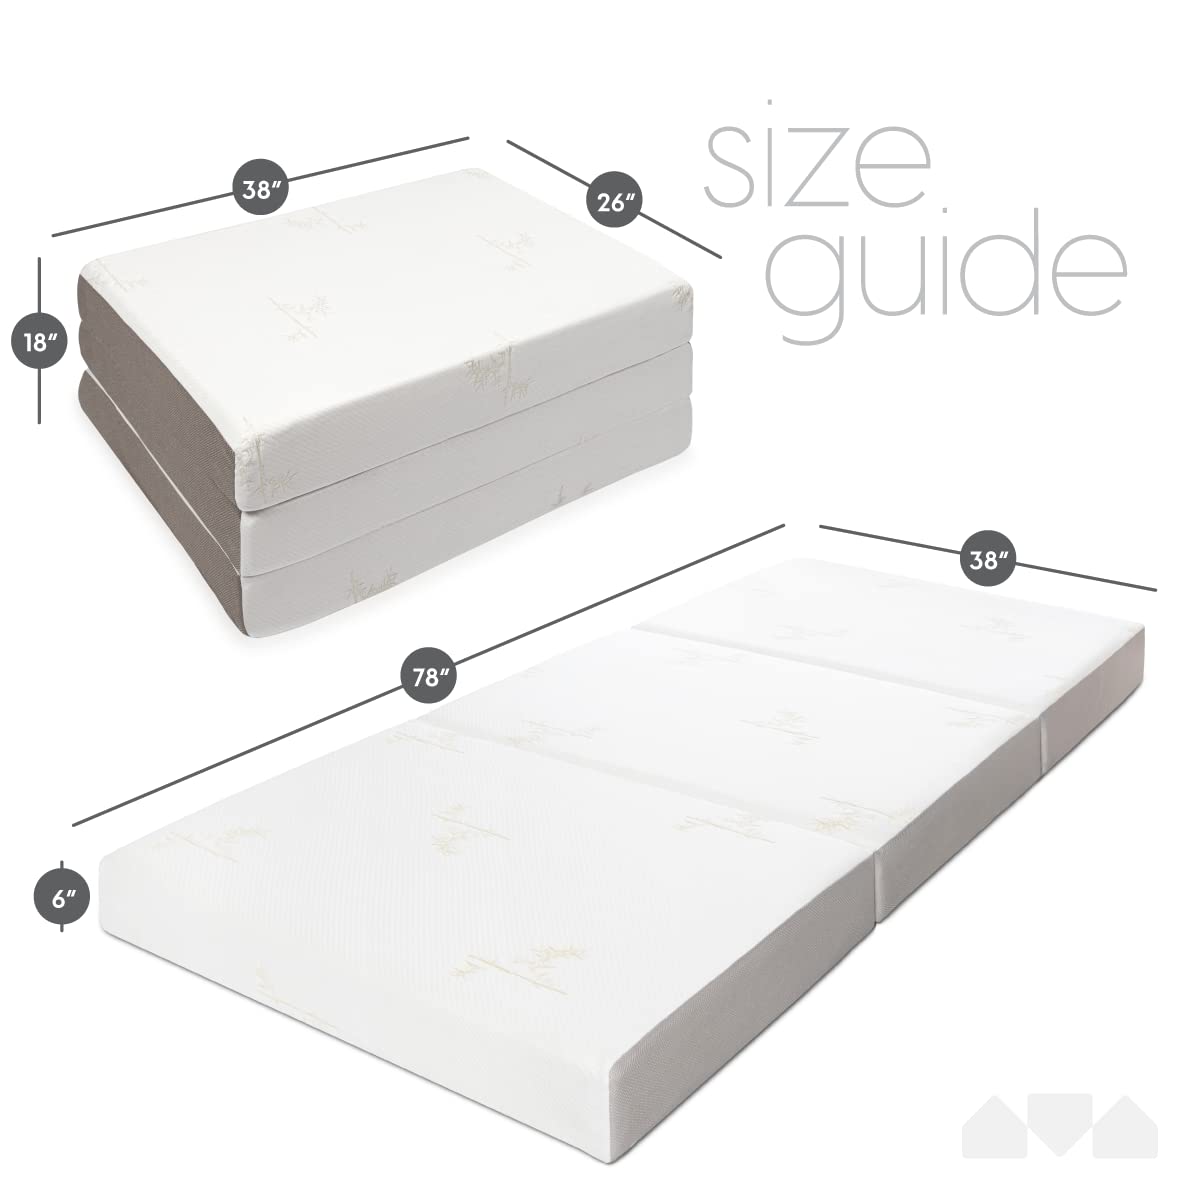 Milliard Tri-Folding Memory Foam Foldable Memory Foam Mattress with Washable Cover, Twin XL Size (78"x38"x6")